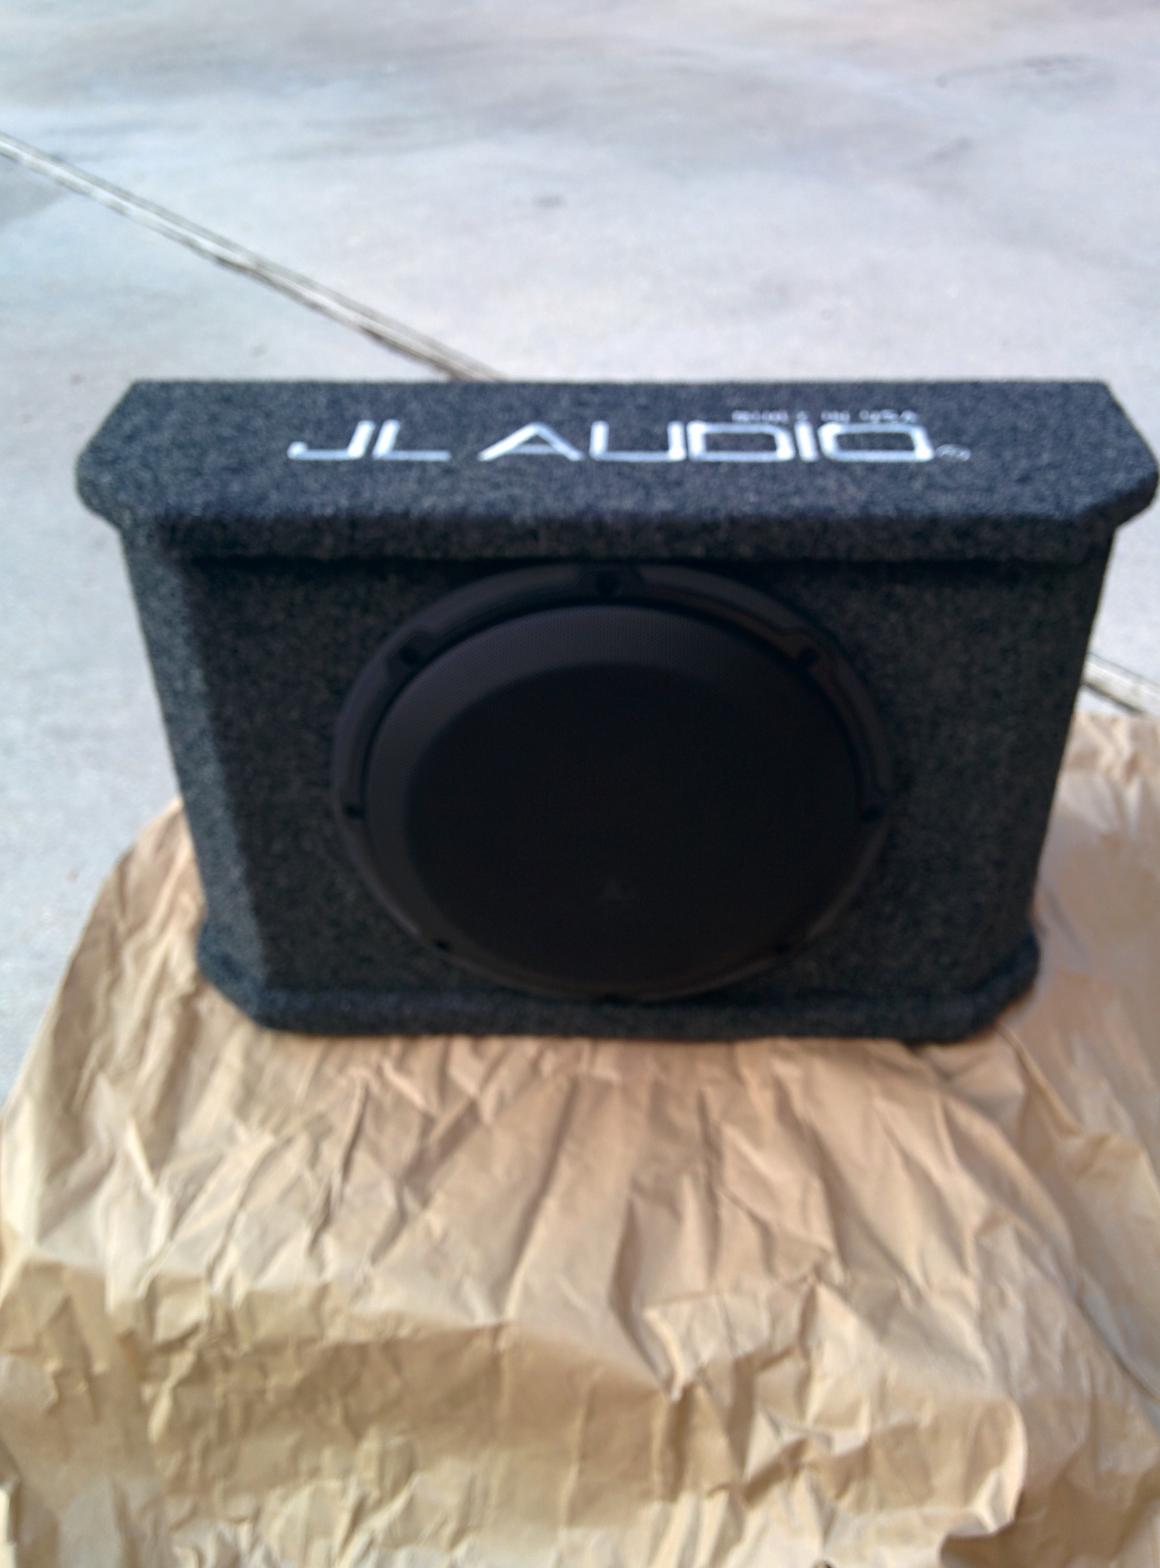 Fs focal speakers and jl subwoofer-img_20151202_093510-jpg